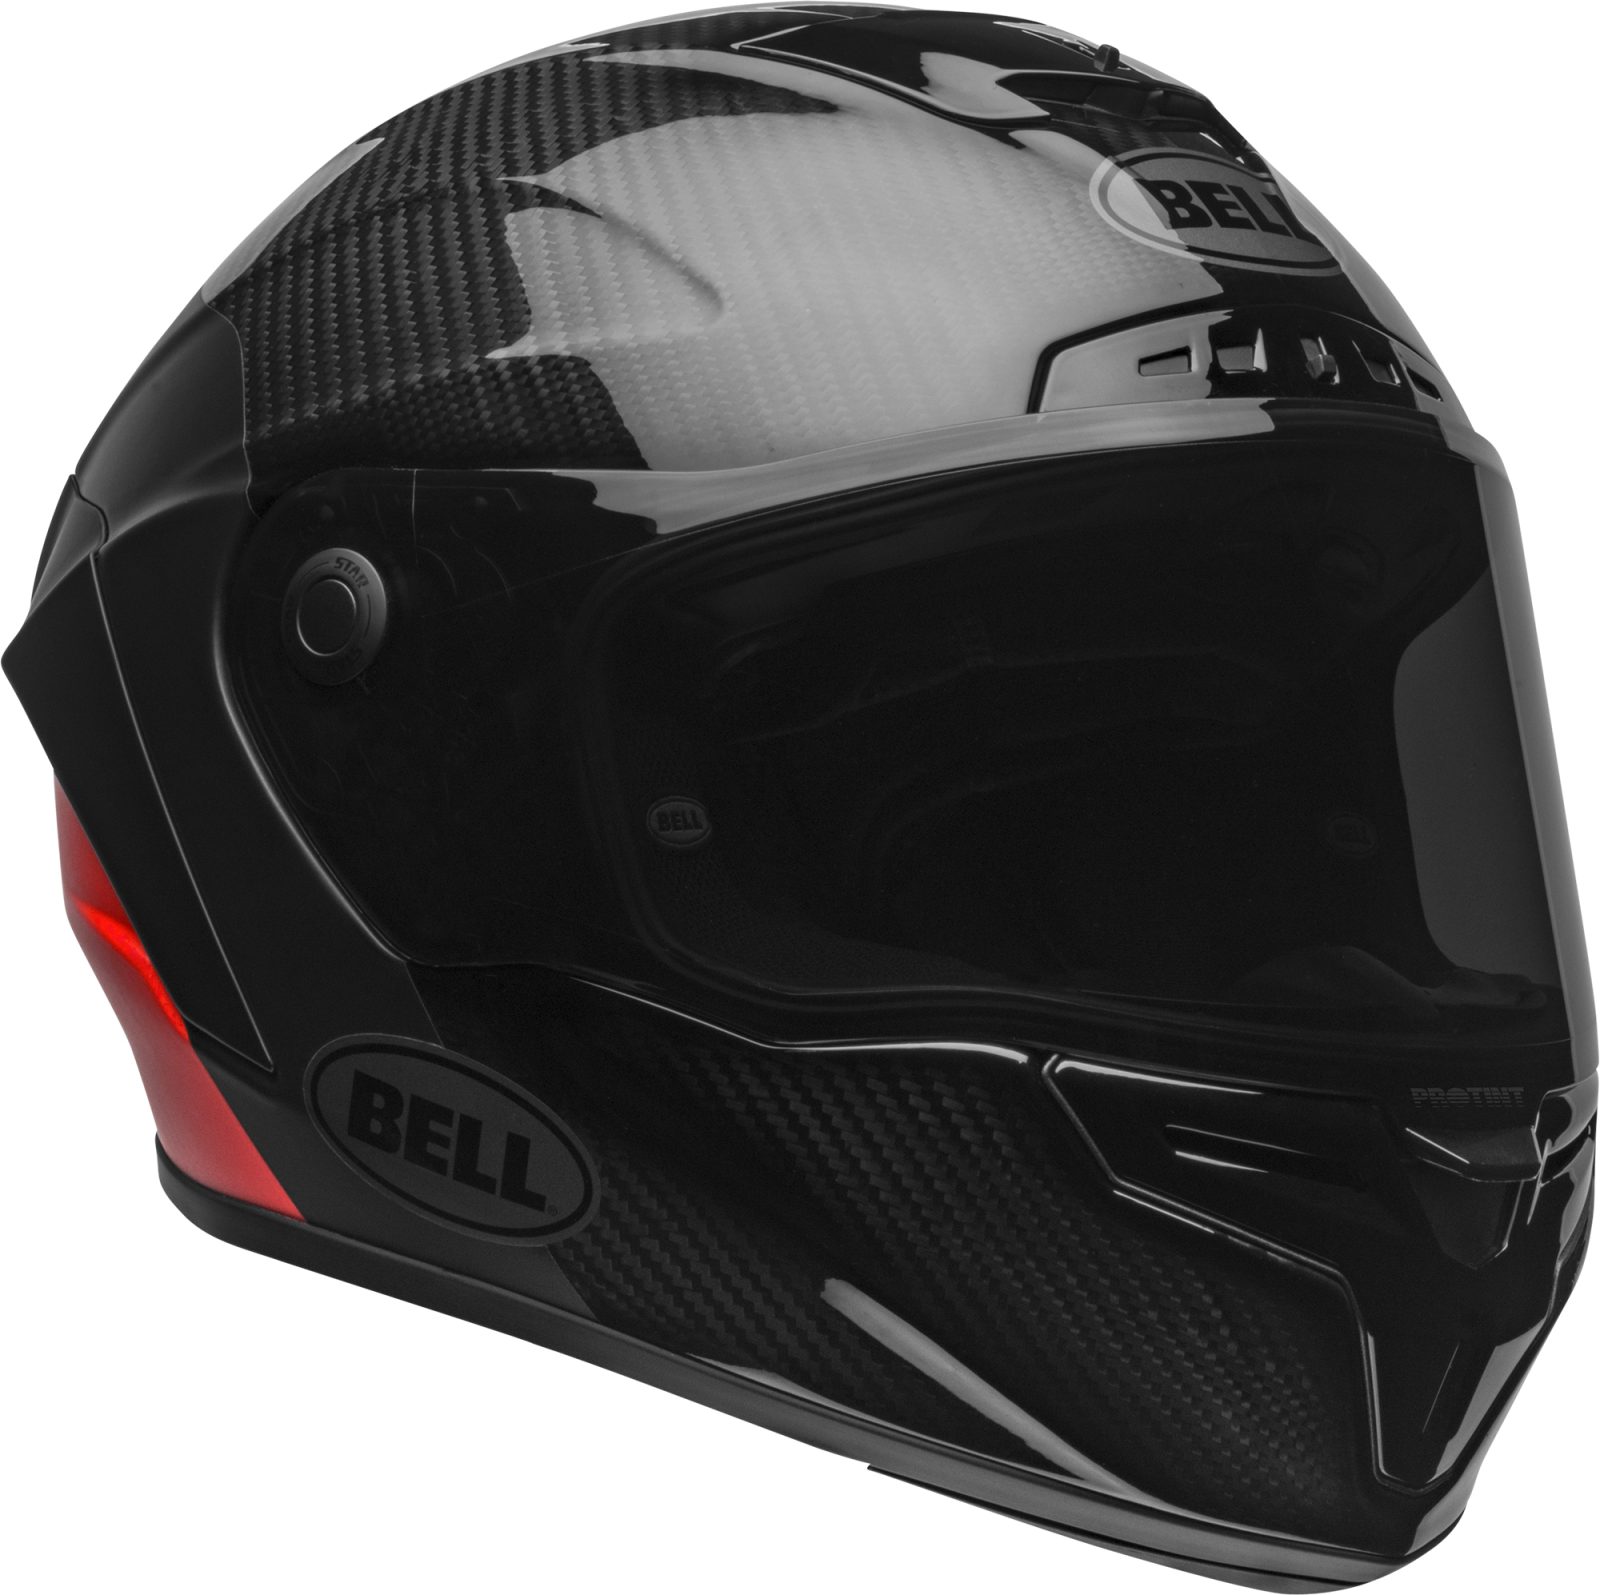 bell-race-star-flex-dlx-street-helmet-carbon-lux-matte-gloss-black-red-front-right - Australian 